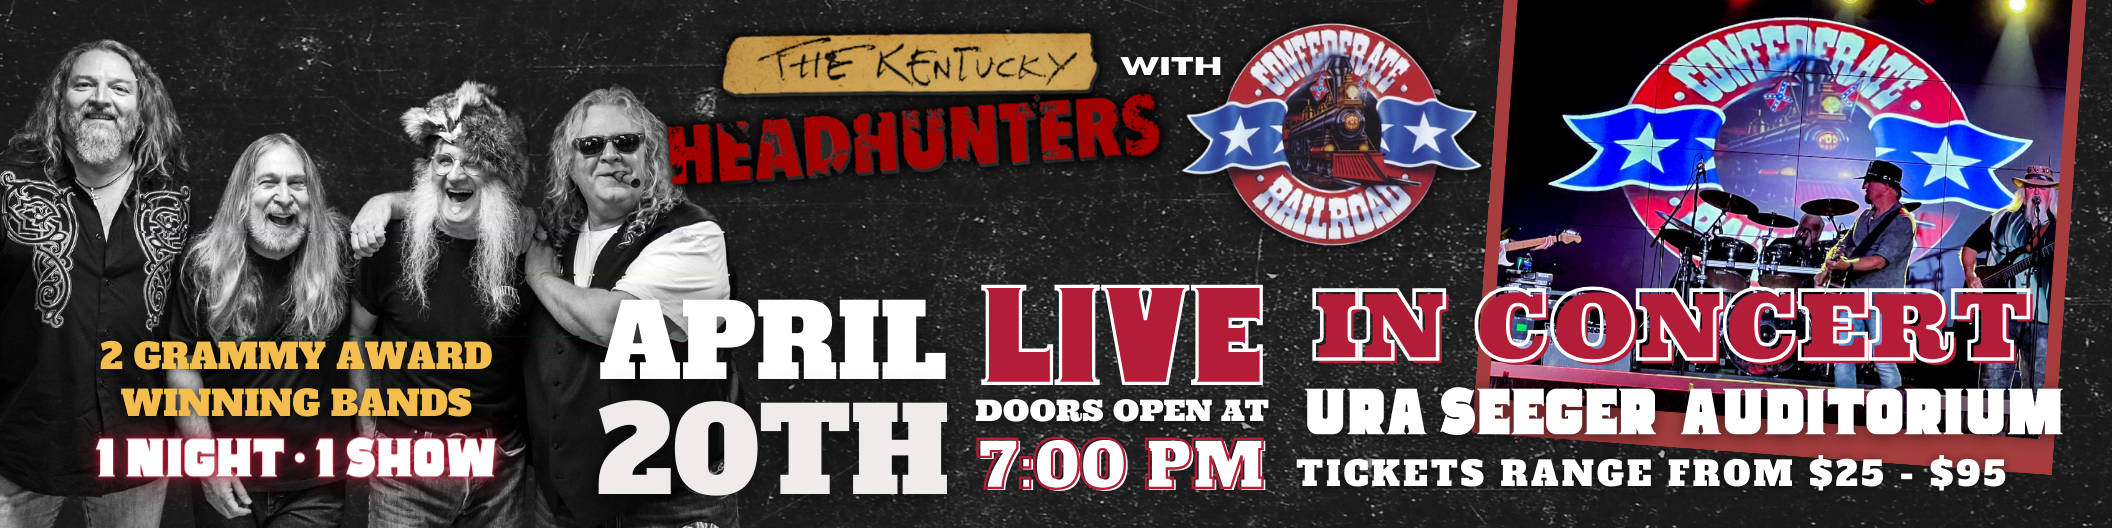 Kentucky-Headhunters-Website-Header-LMR-2.png